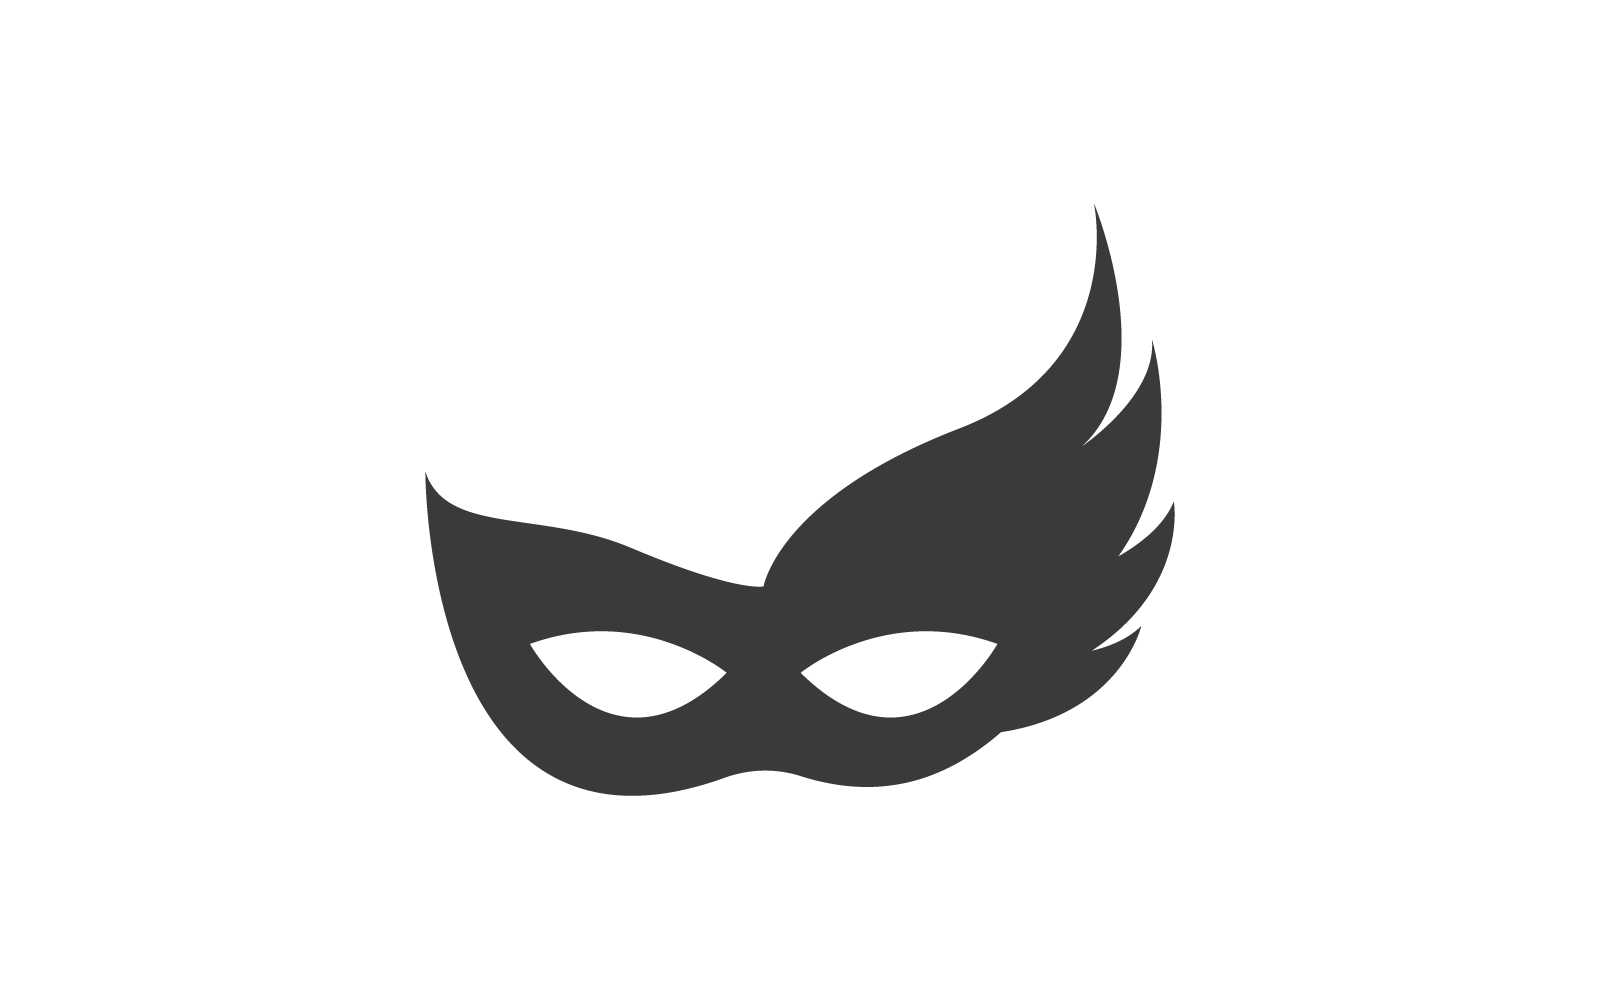 Party mask black vector illustration